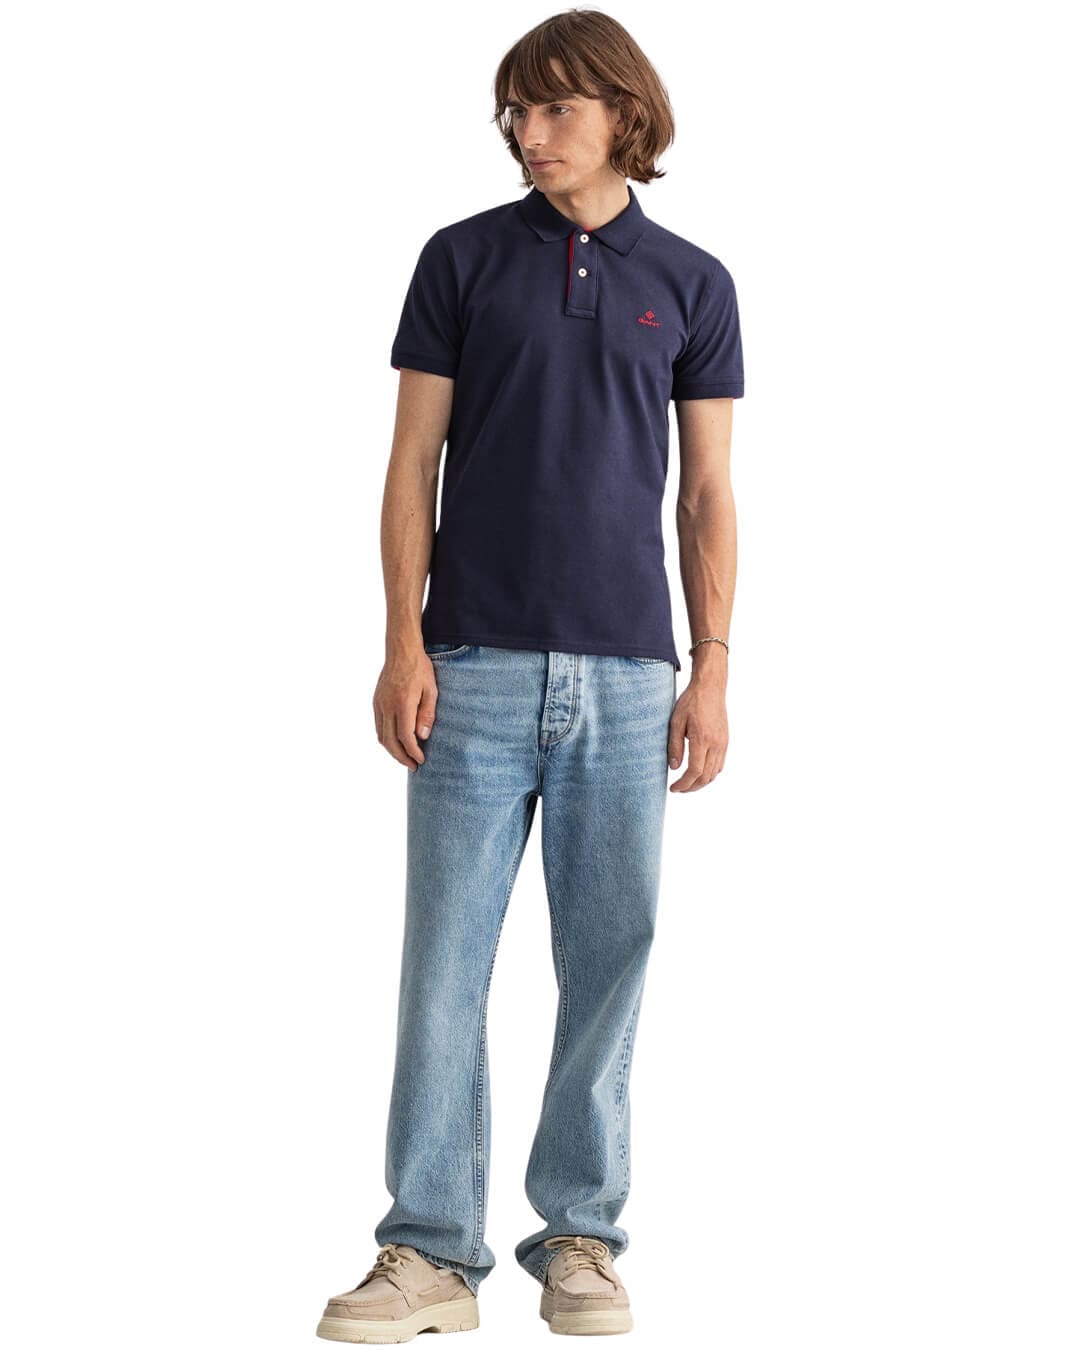 Gant Polo Shirts Gant Navy With Contrast Collar Polo Shirt